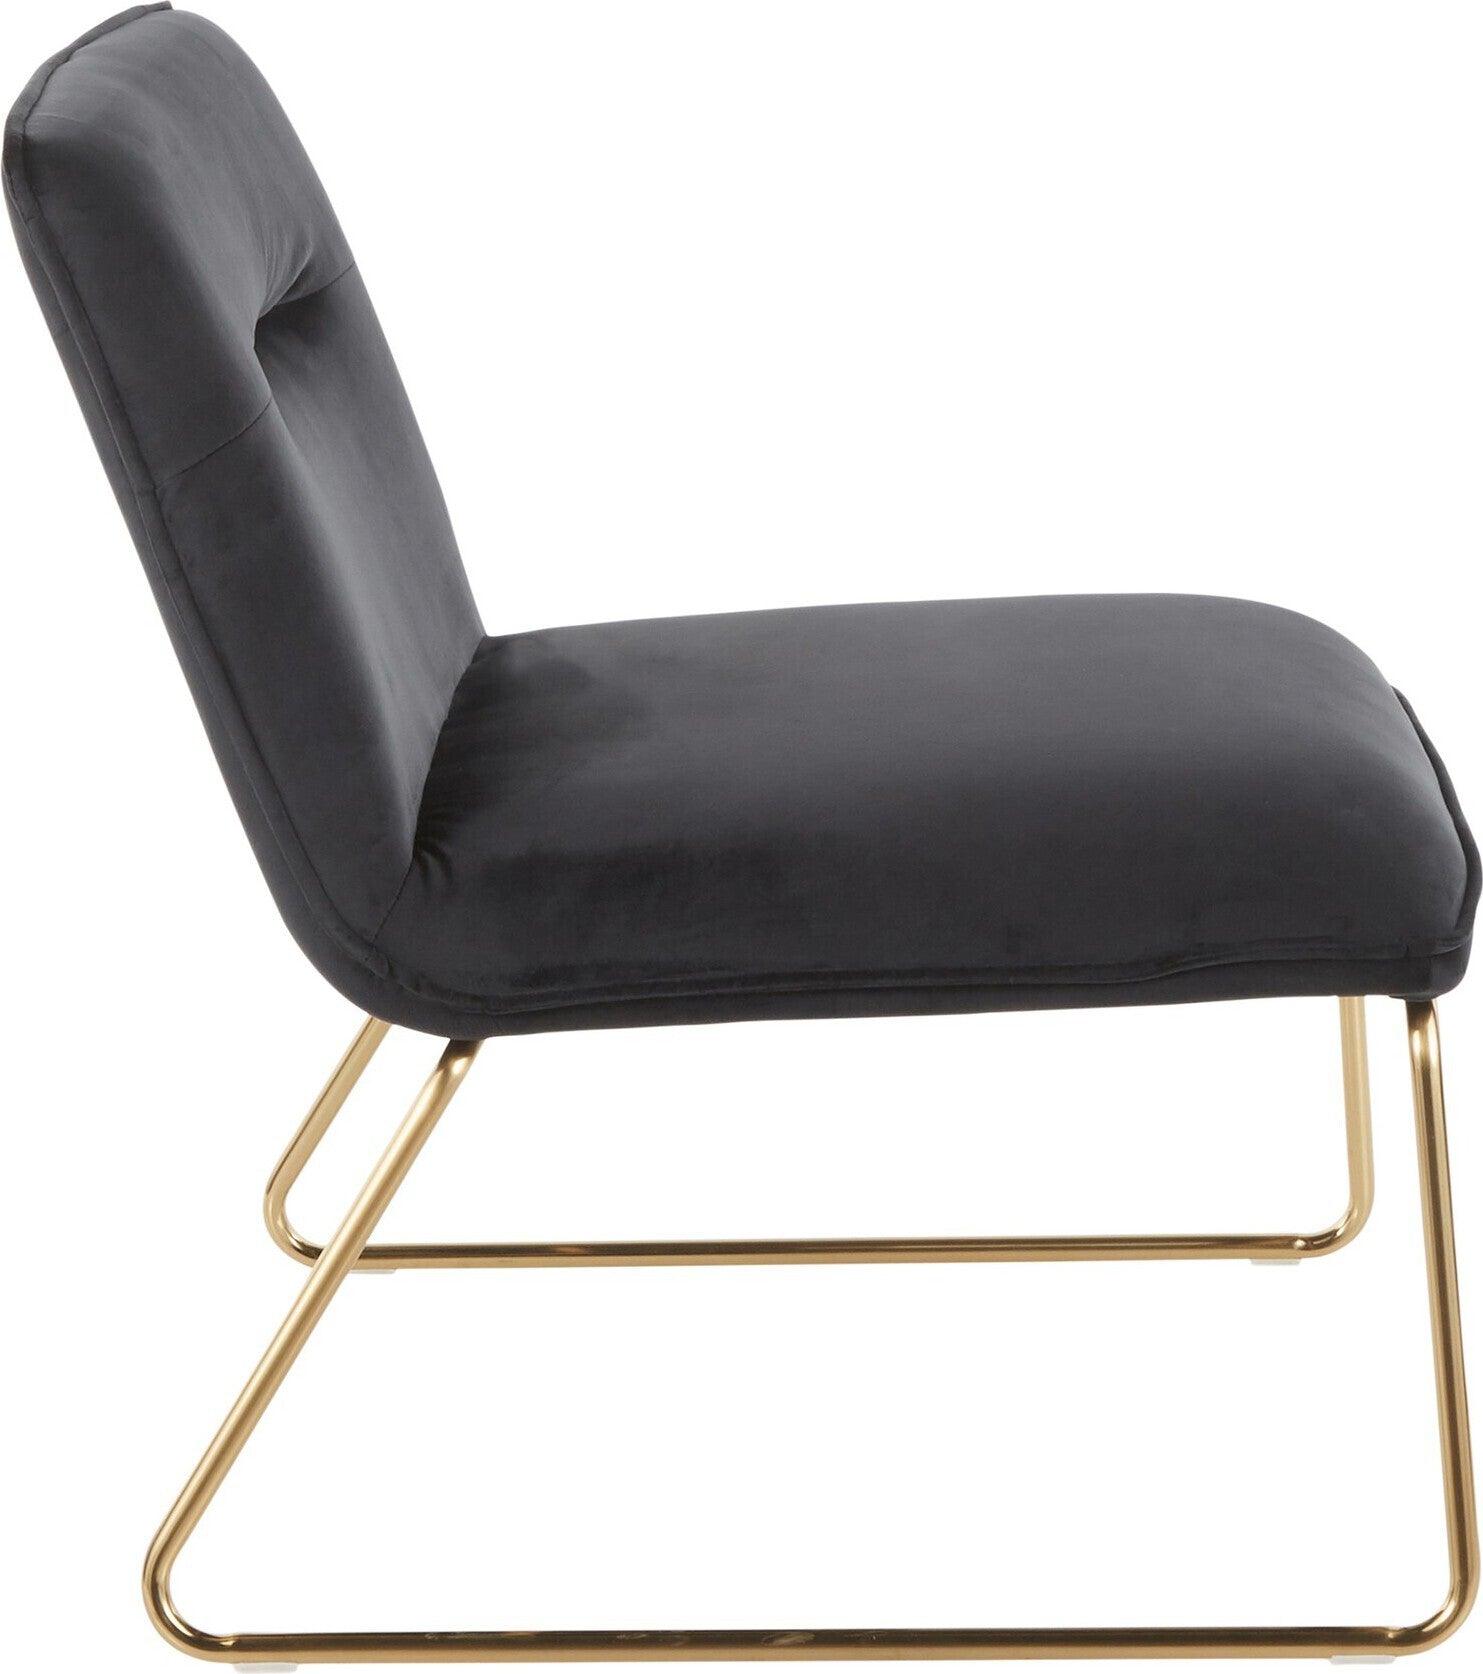 Lumisource Accent Chairs - Casper Accent Chair Gold & Black